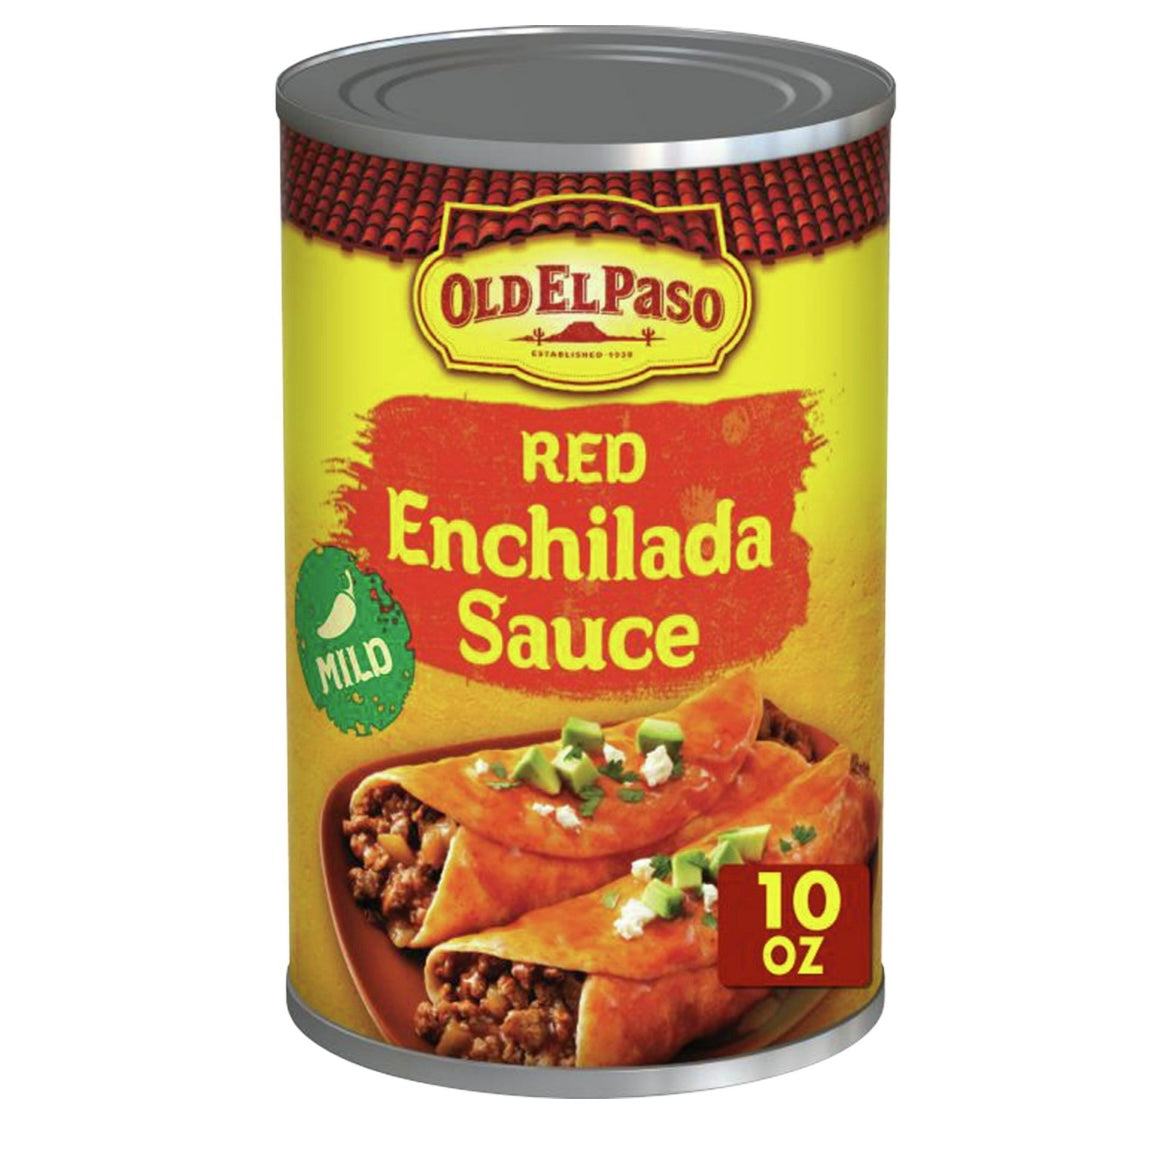 Old El Paso Red Enchilada Sauce, 10oz